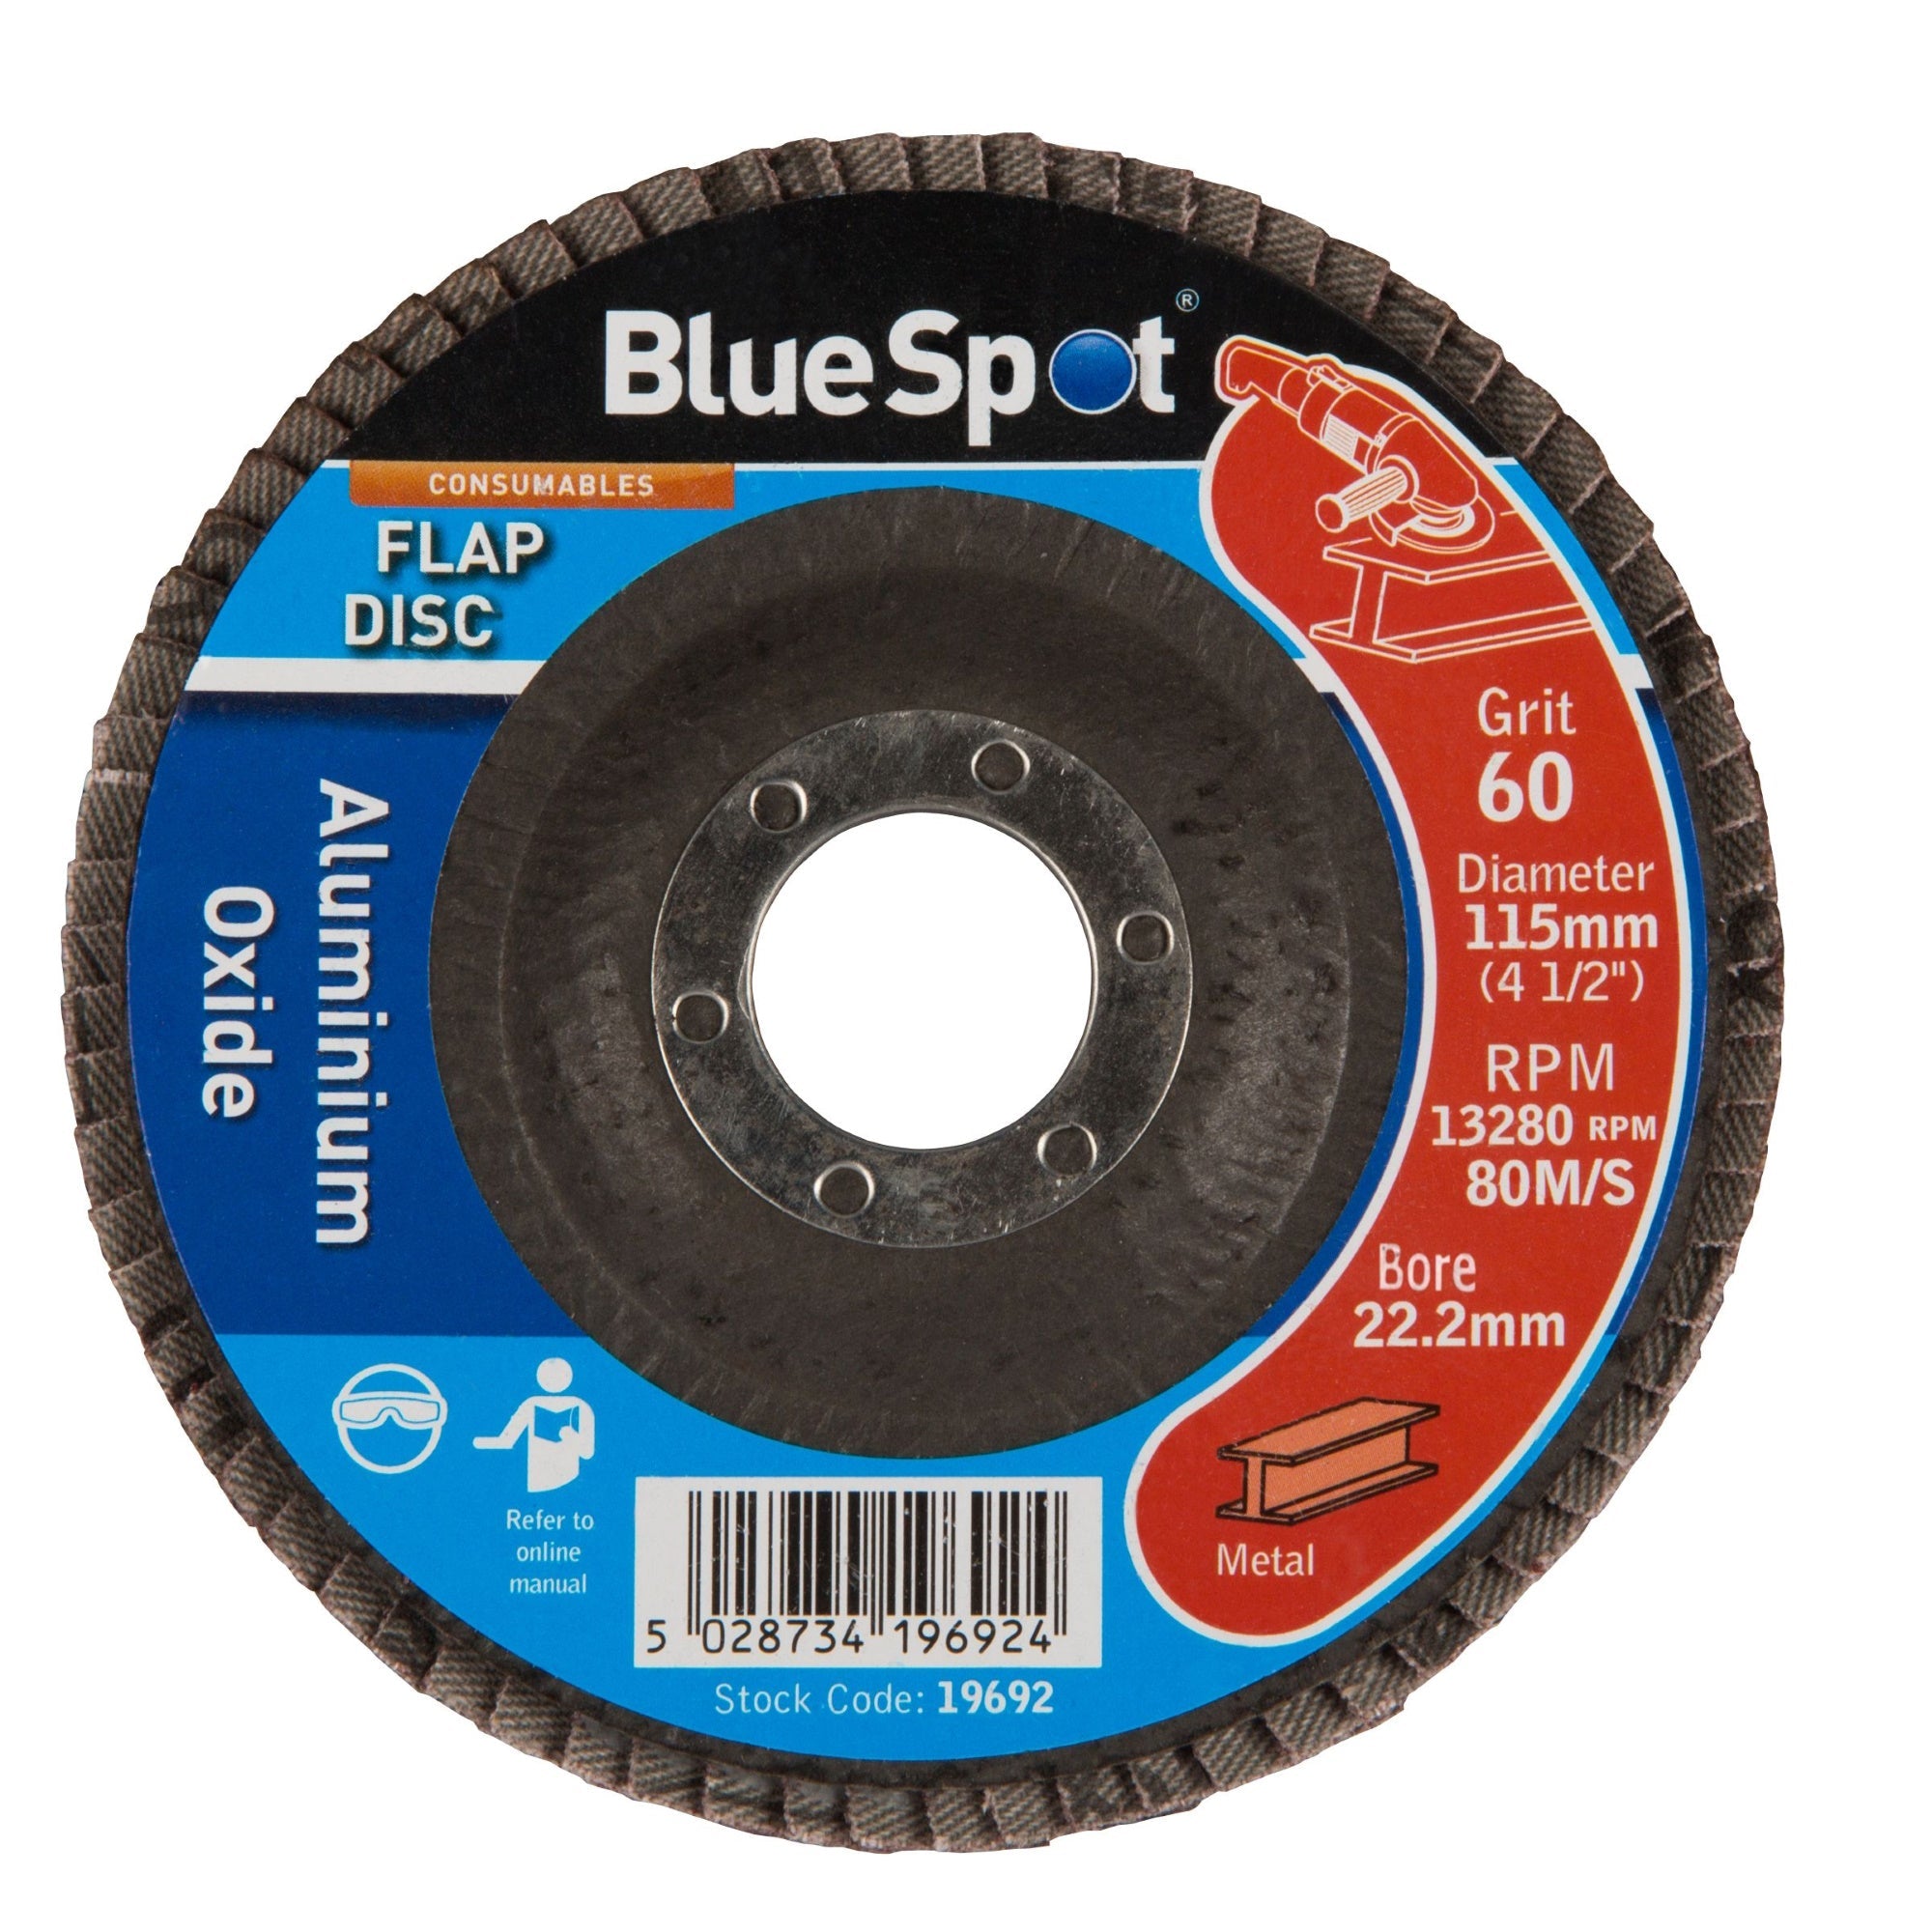 BlueSpot 19692 Aluminium Oxide Flap Disc 115mm - 60 Grit - Premium Sanding from Blue Spot - Just $1.99! Shop now at W Hurst & Son (IW) Ltd